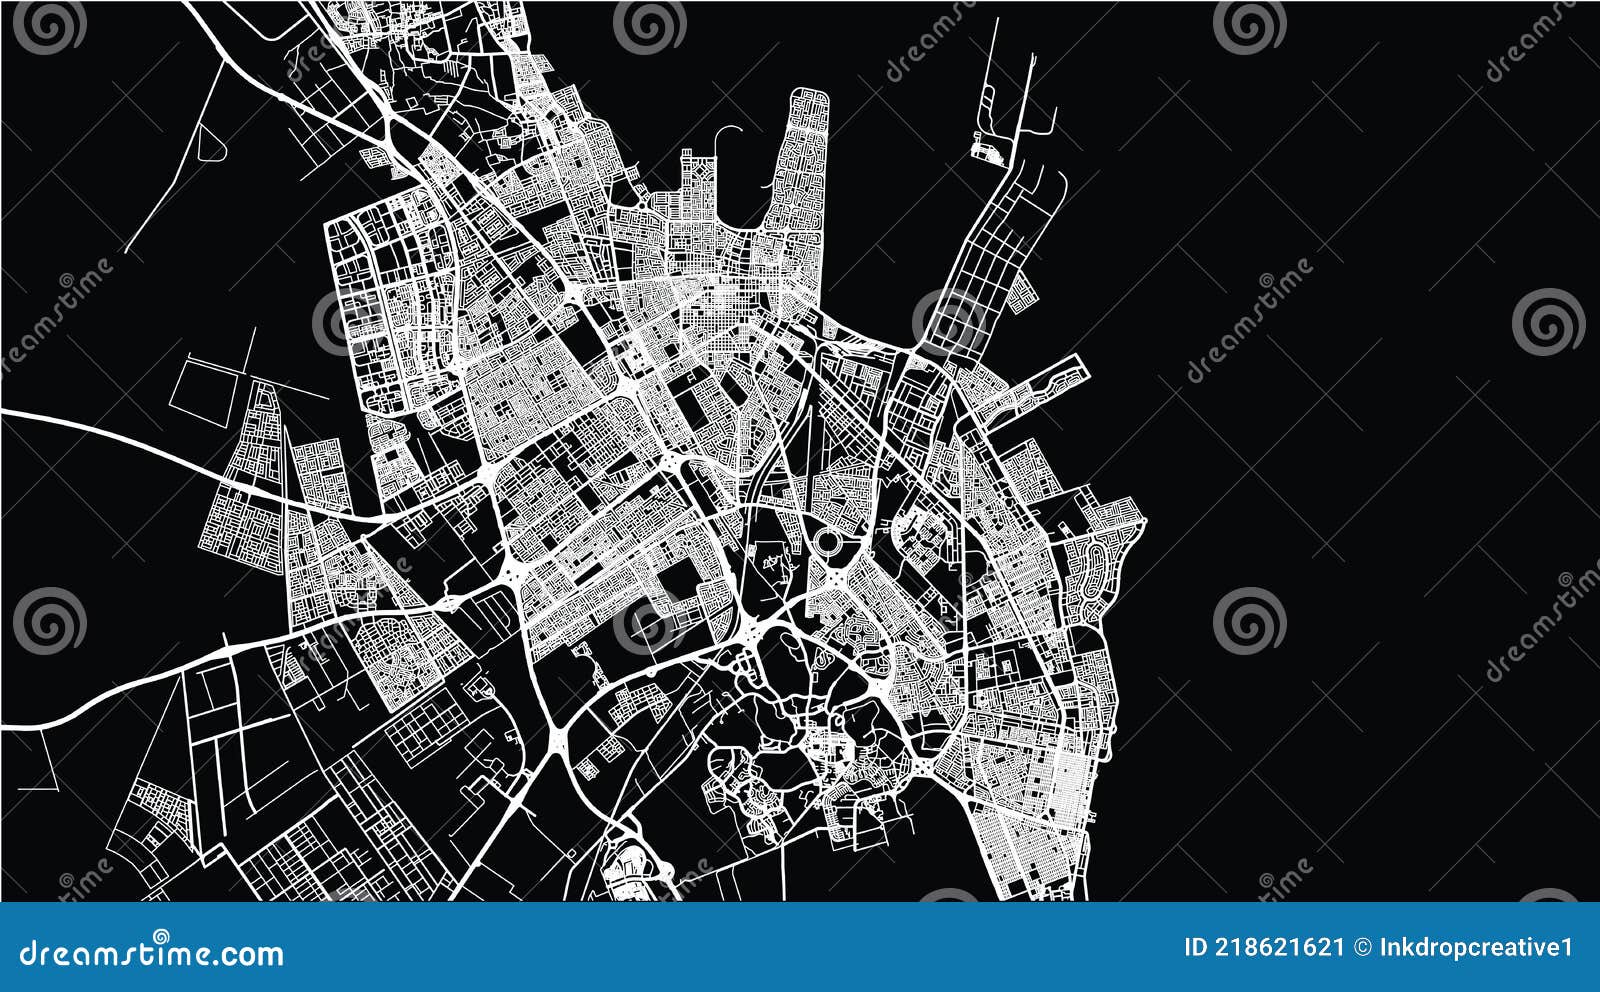 urban  city map of dammam, saudi arabia, middle east